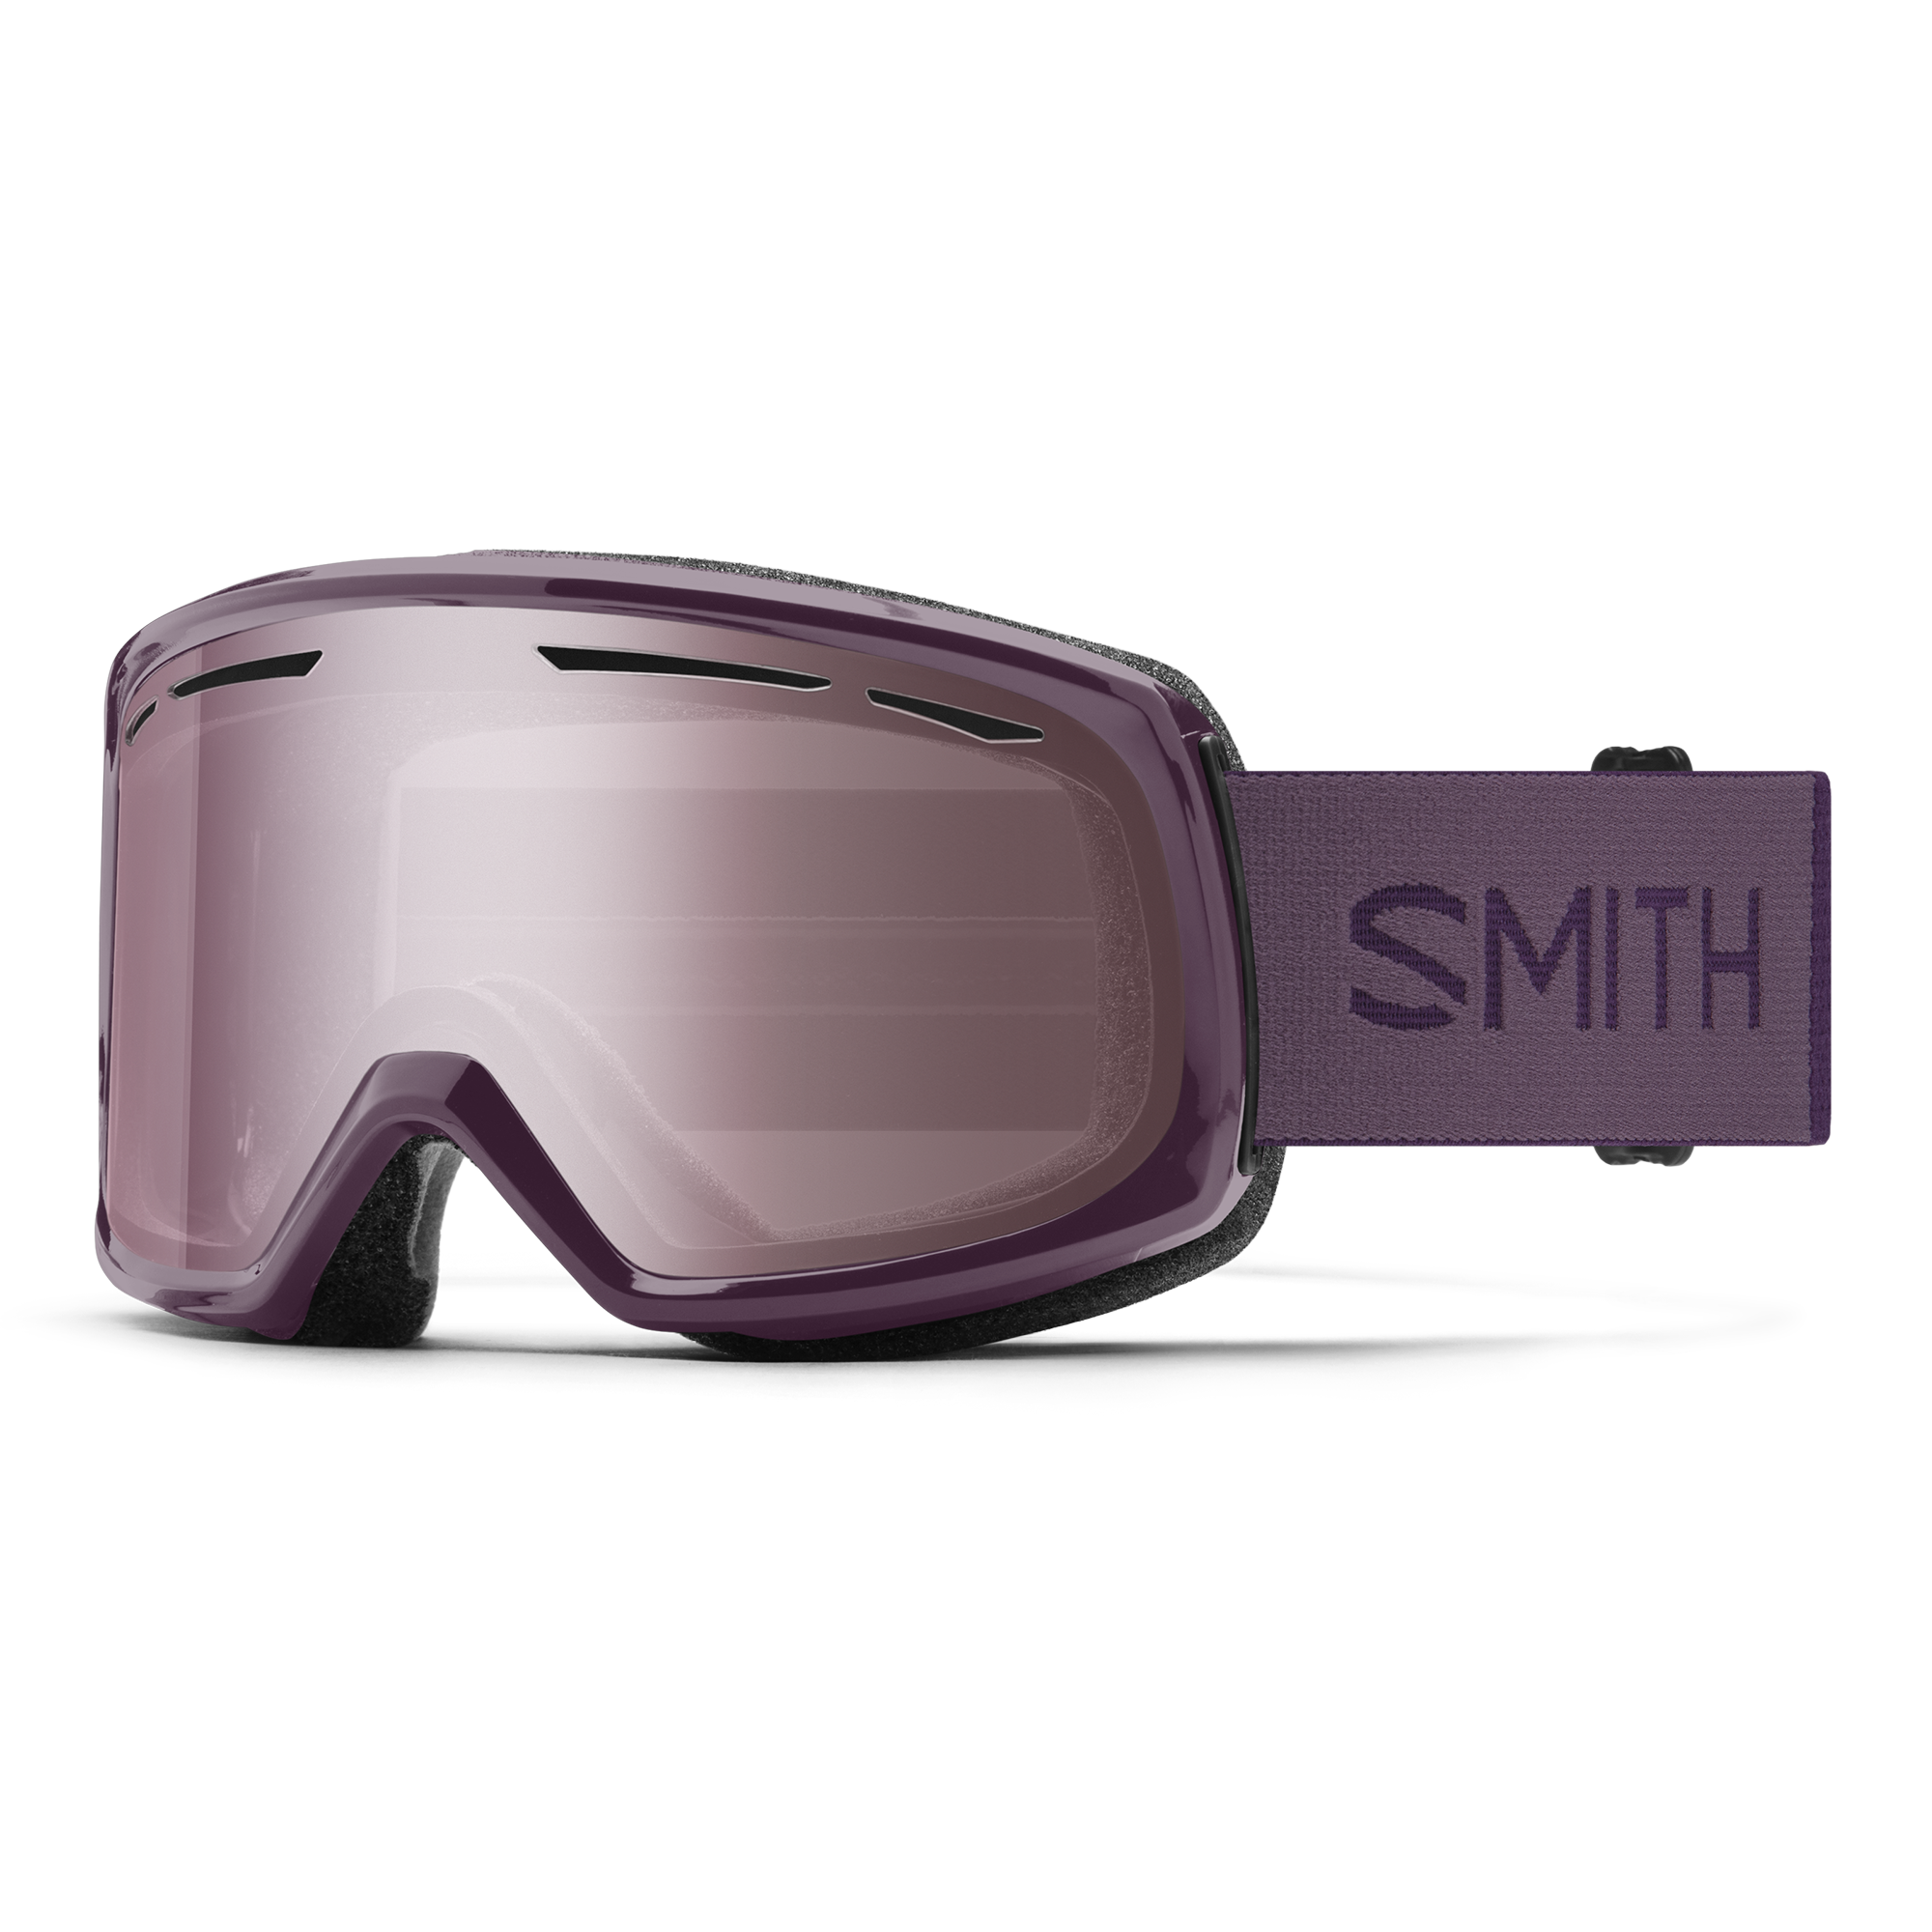 SMITH Scope Pro Ski Goggles Unisex Adult Camo 